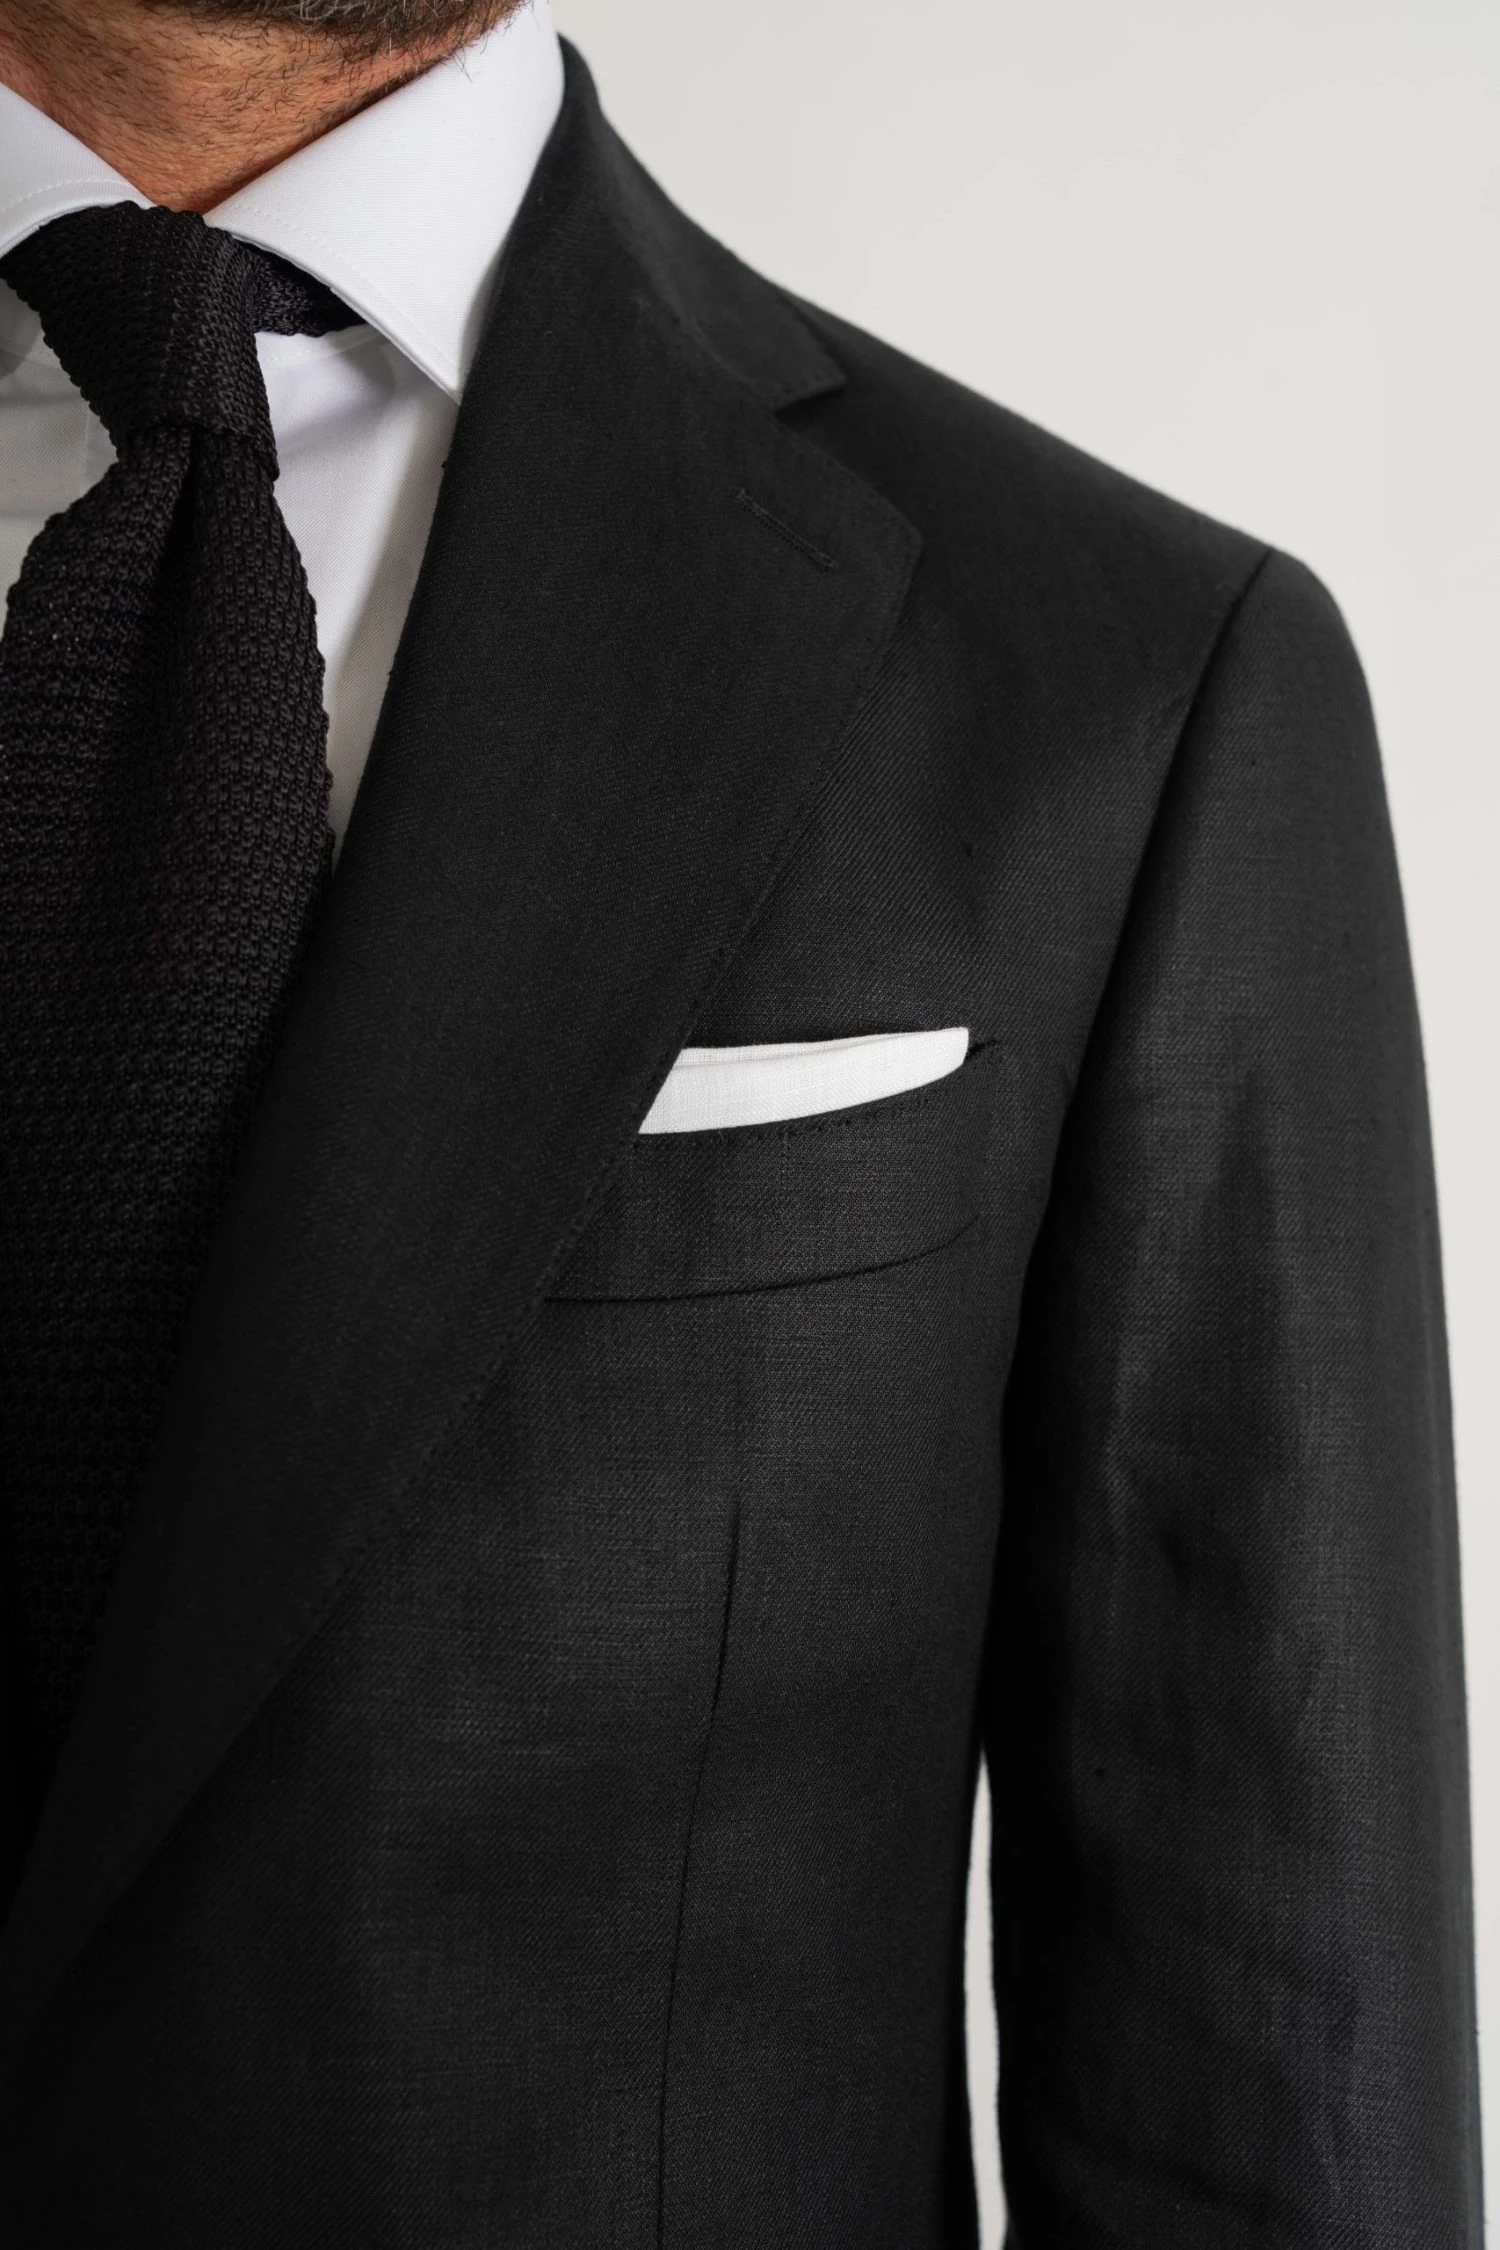 1 custom made black irish linen suit